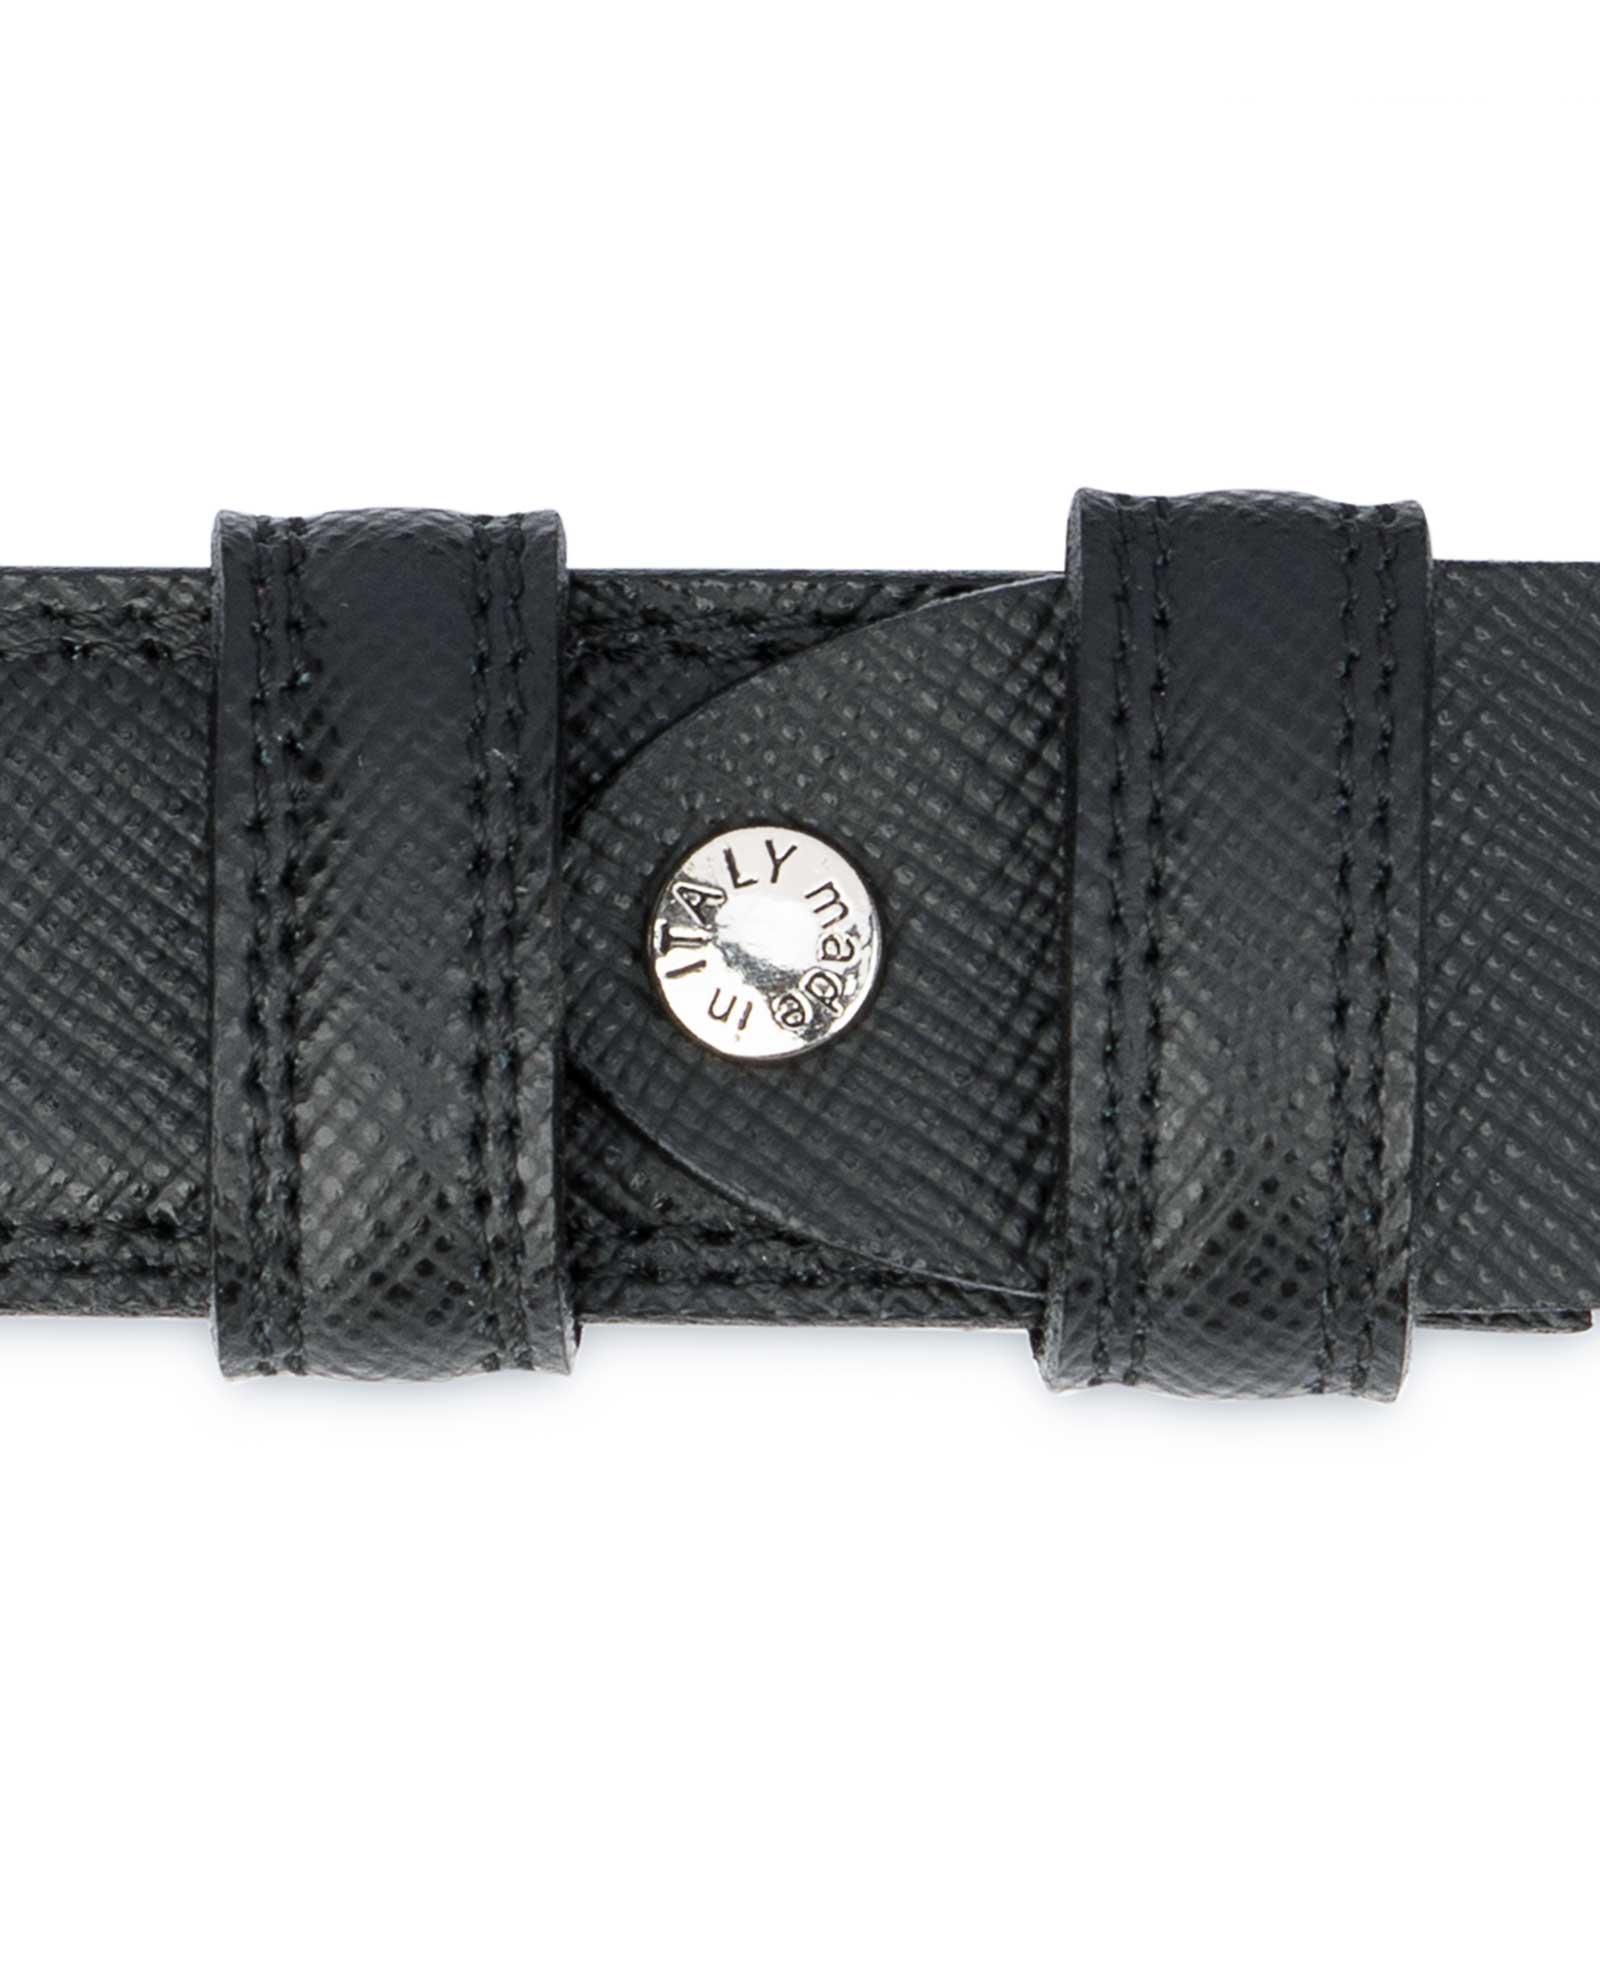 Buy Saffiano Black Leather Belt | Men's Dress | LeatherBeltsOnline.com